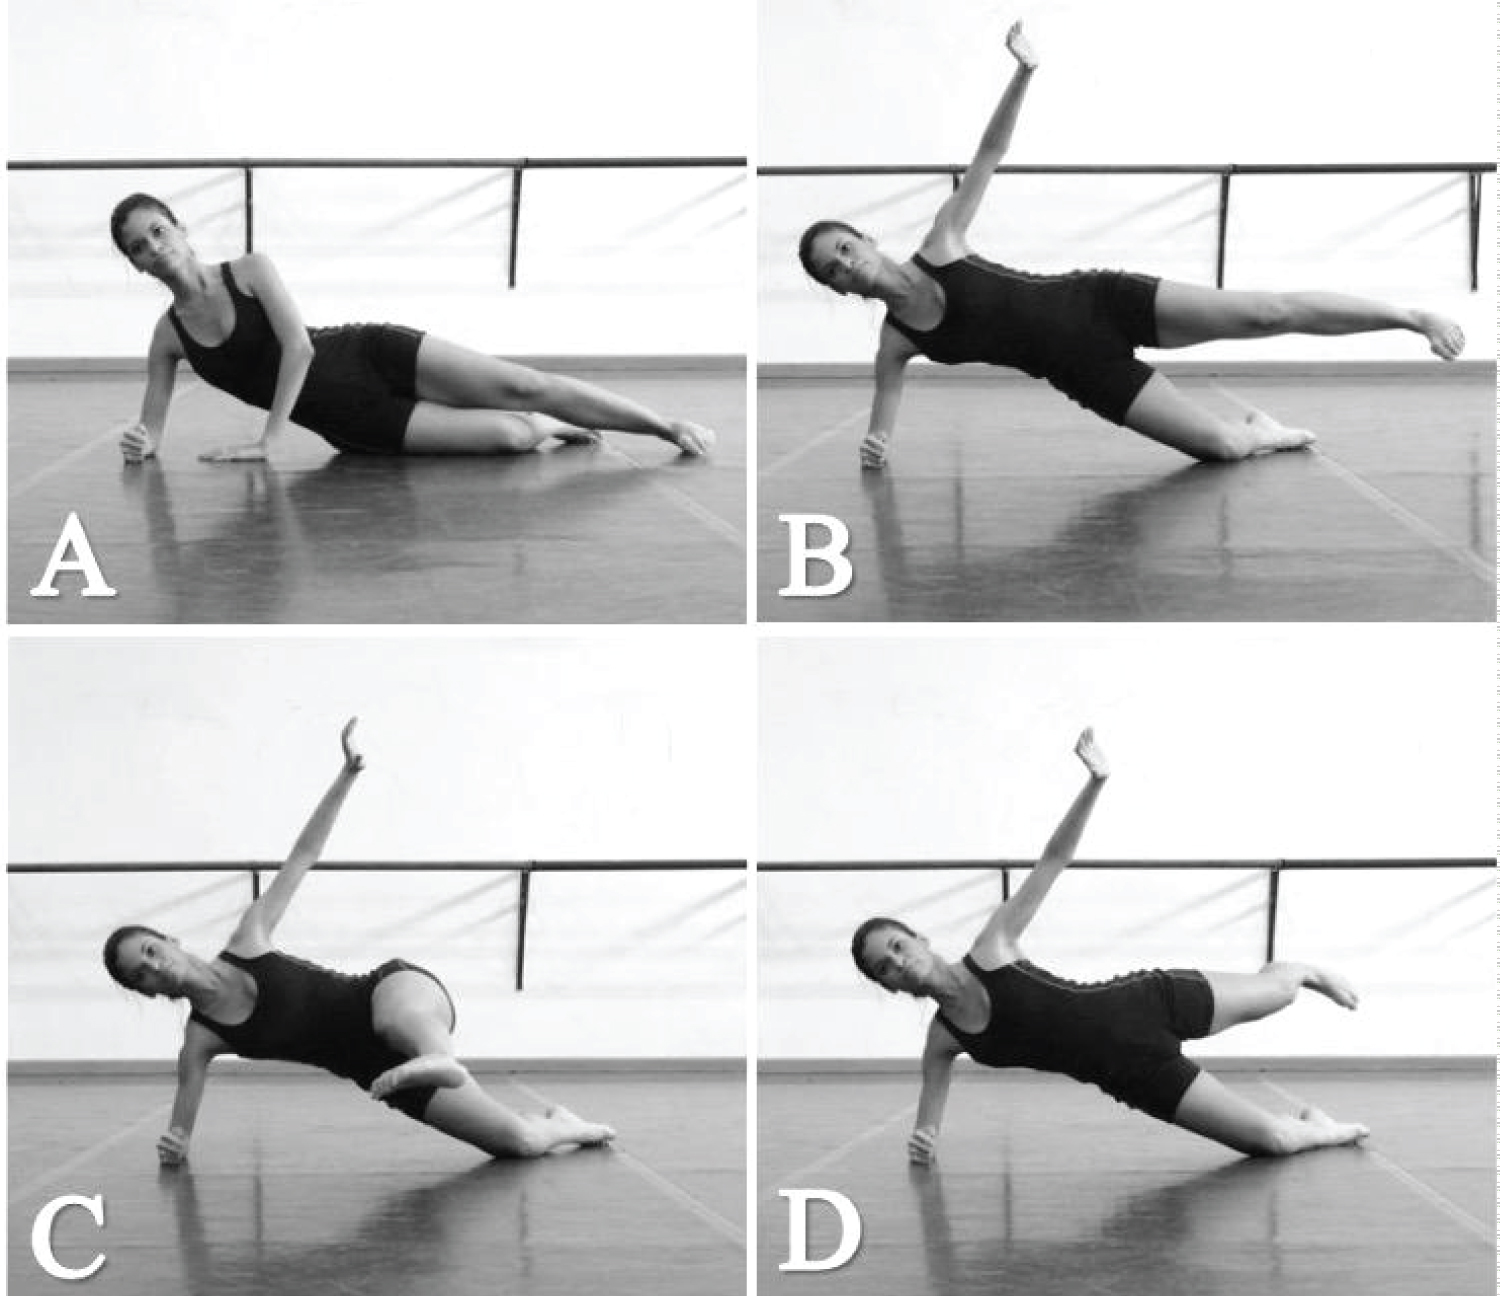 An Intervention Program Based on Motor Coordination Principles Improves  Knee Alignment in Pre-Professional Ballet Dancers